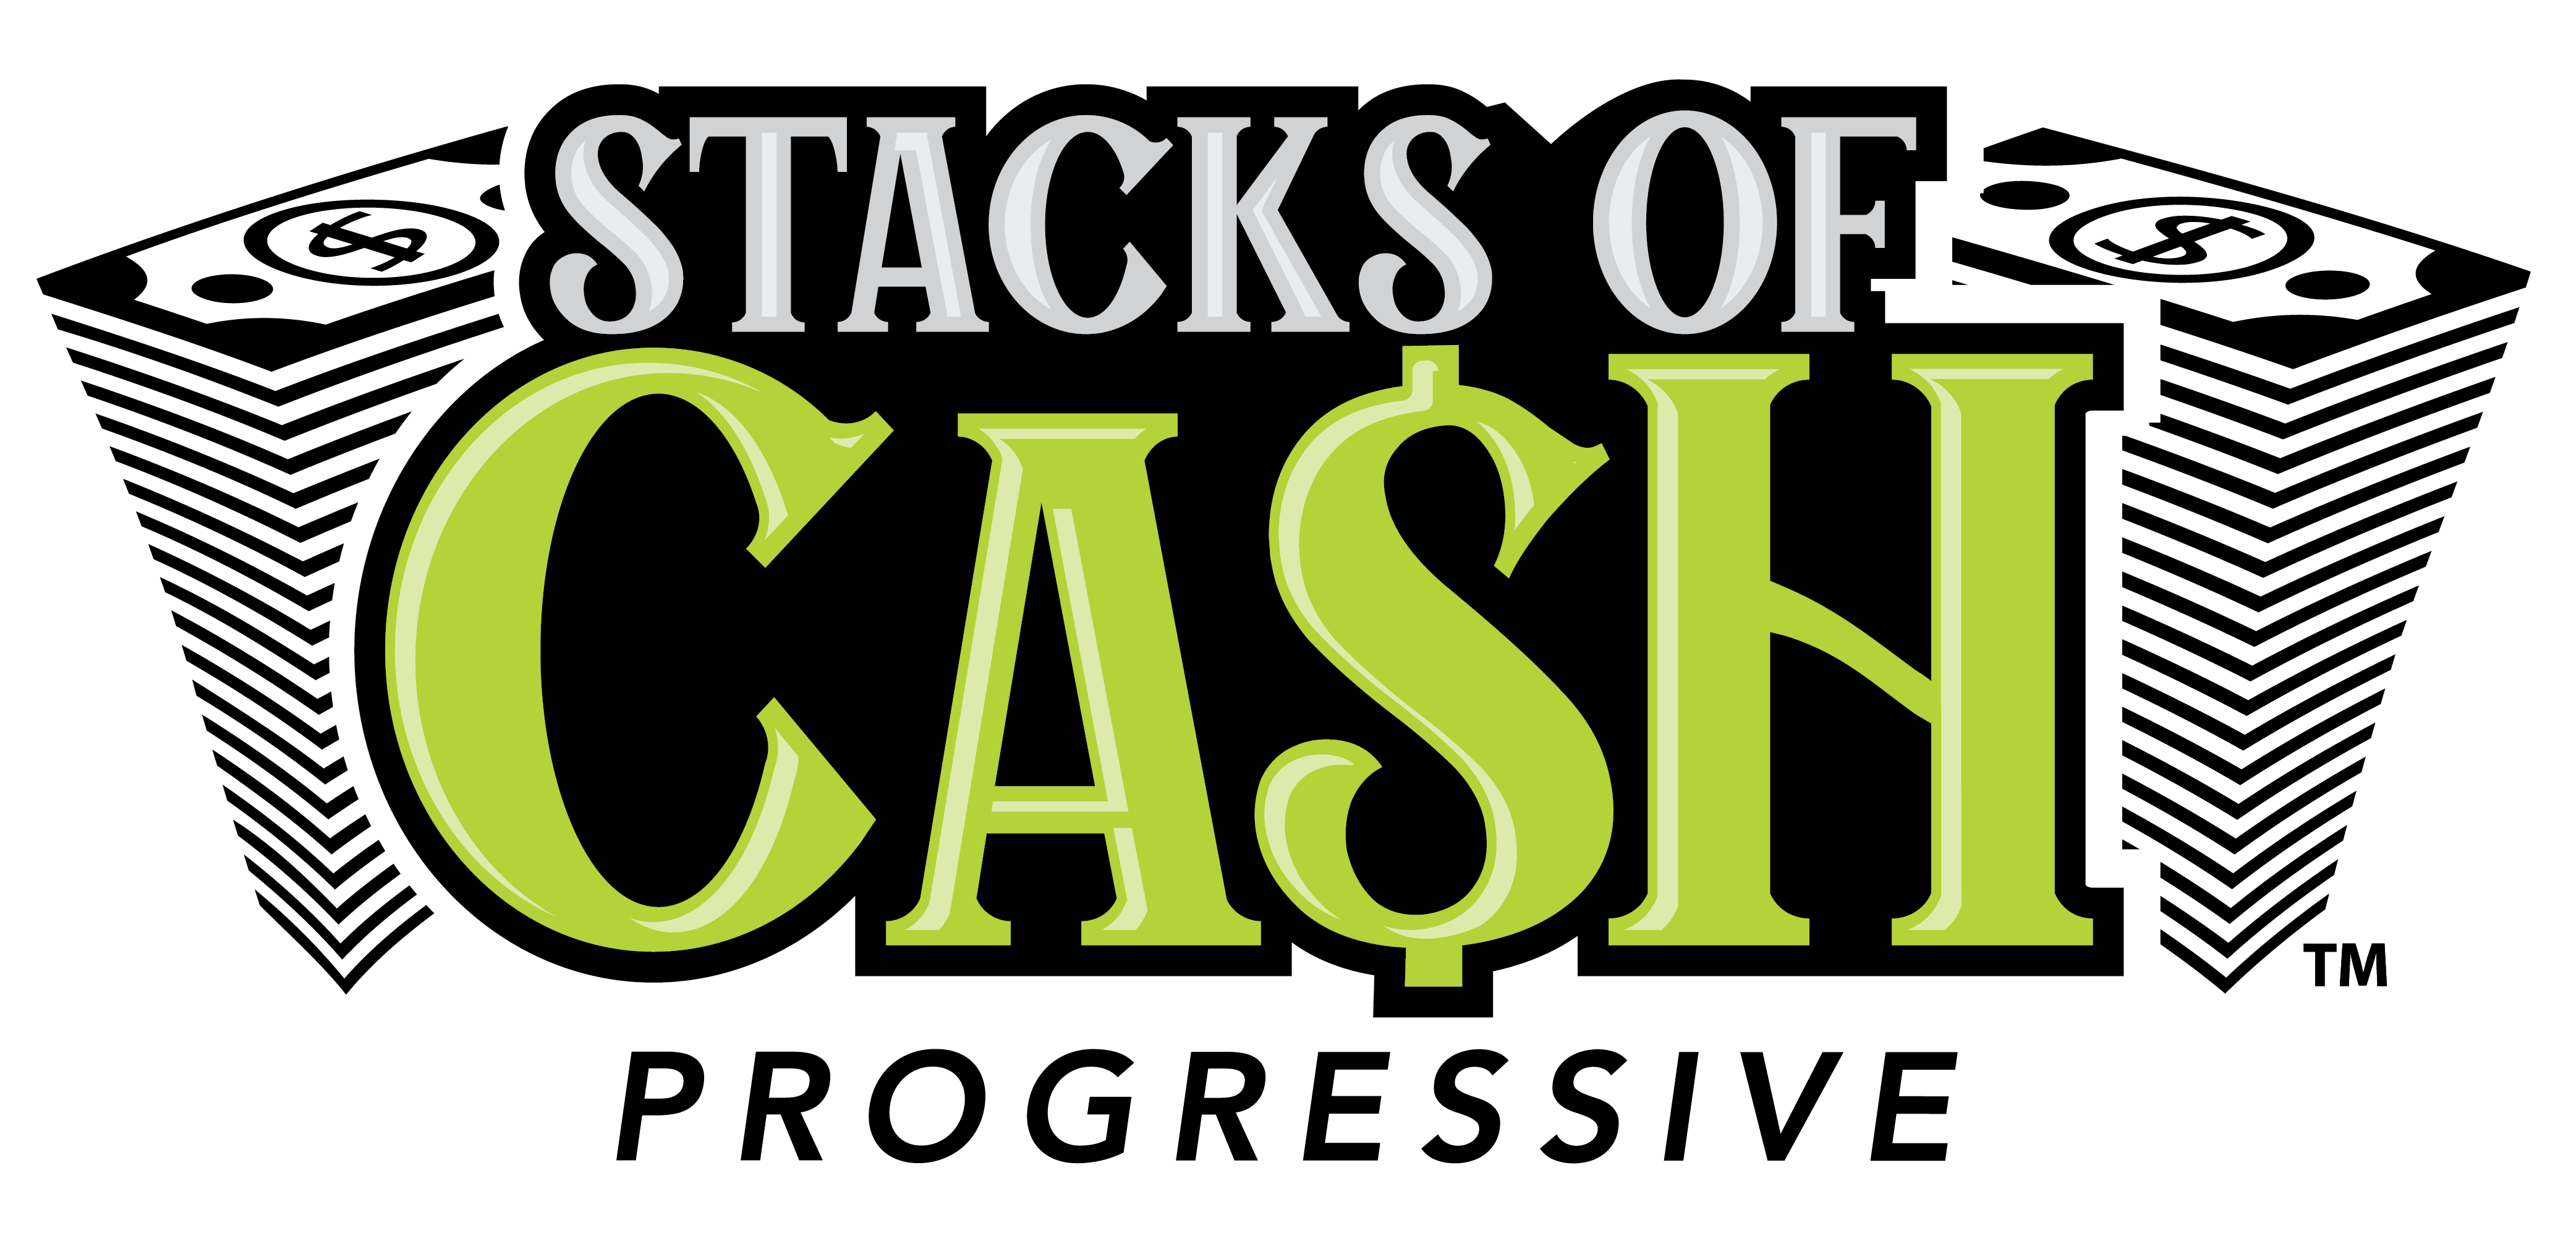 Fast Play Stacks Of CaSh Progressive